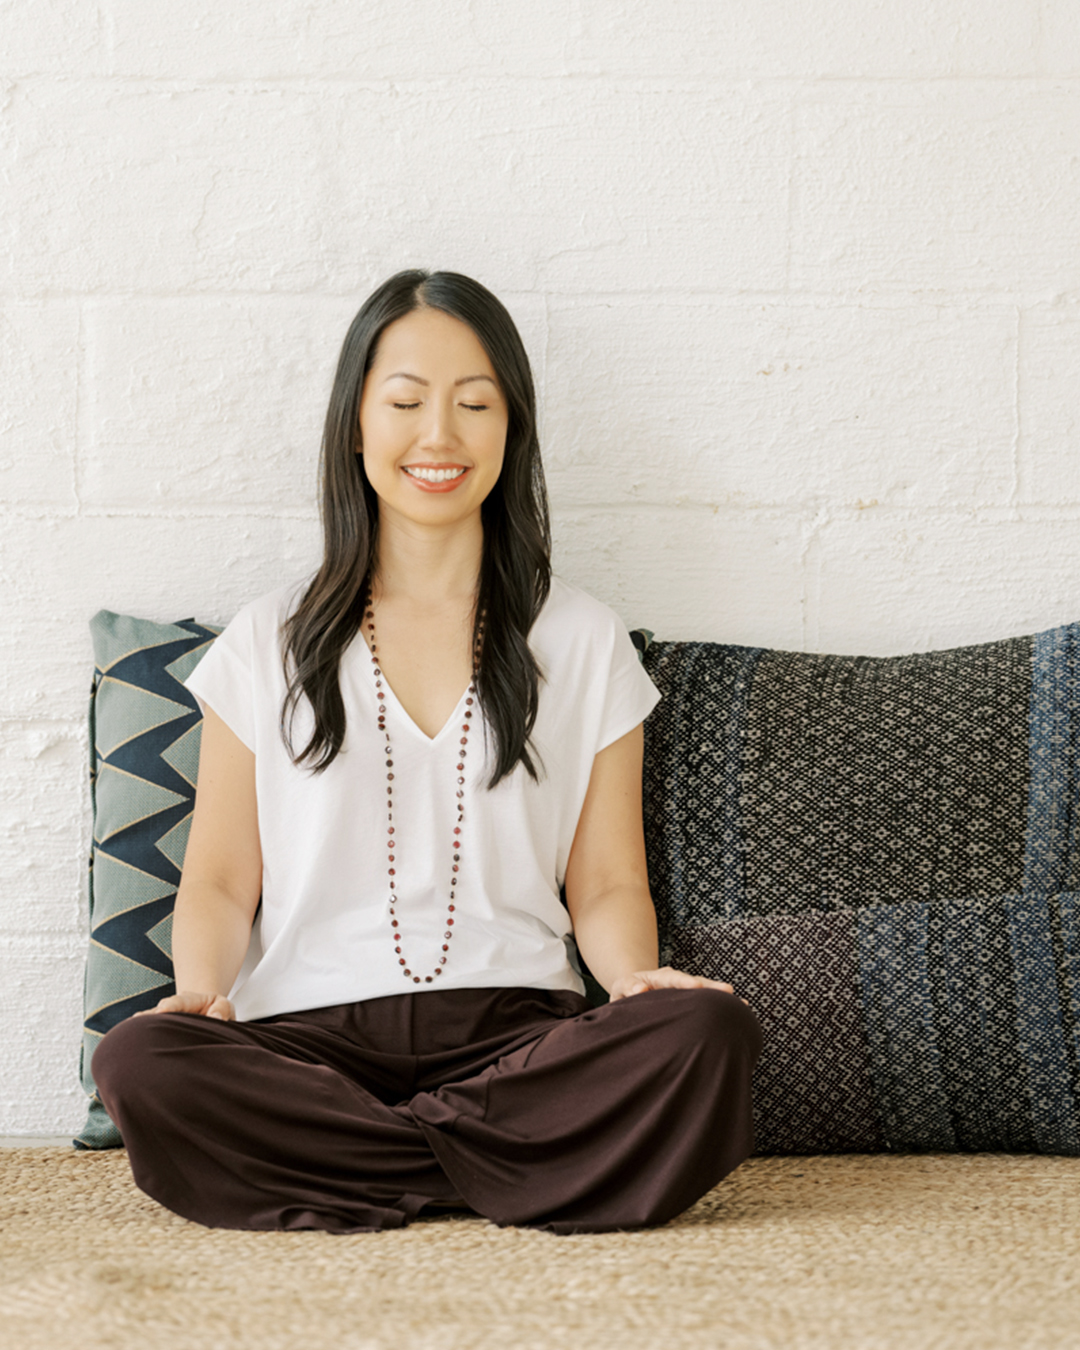 Mantra Meditation: A Go-To Guide With 30 Mantras for Meditation